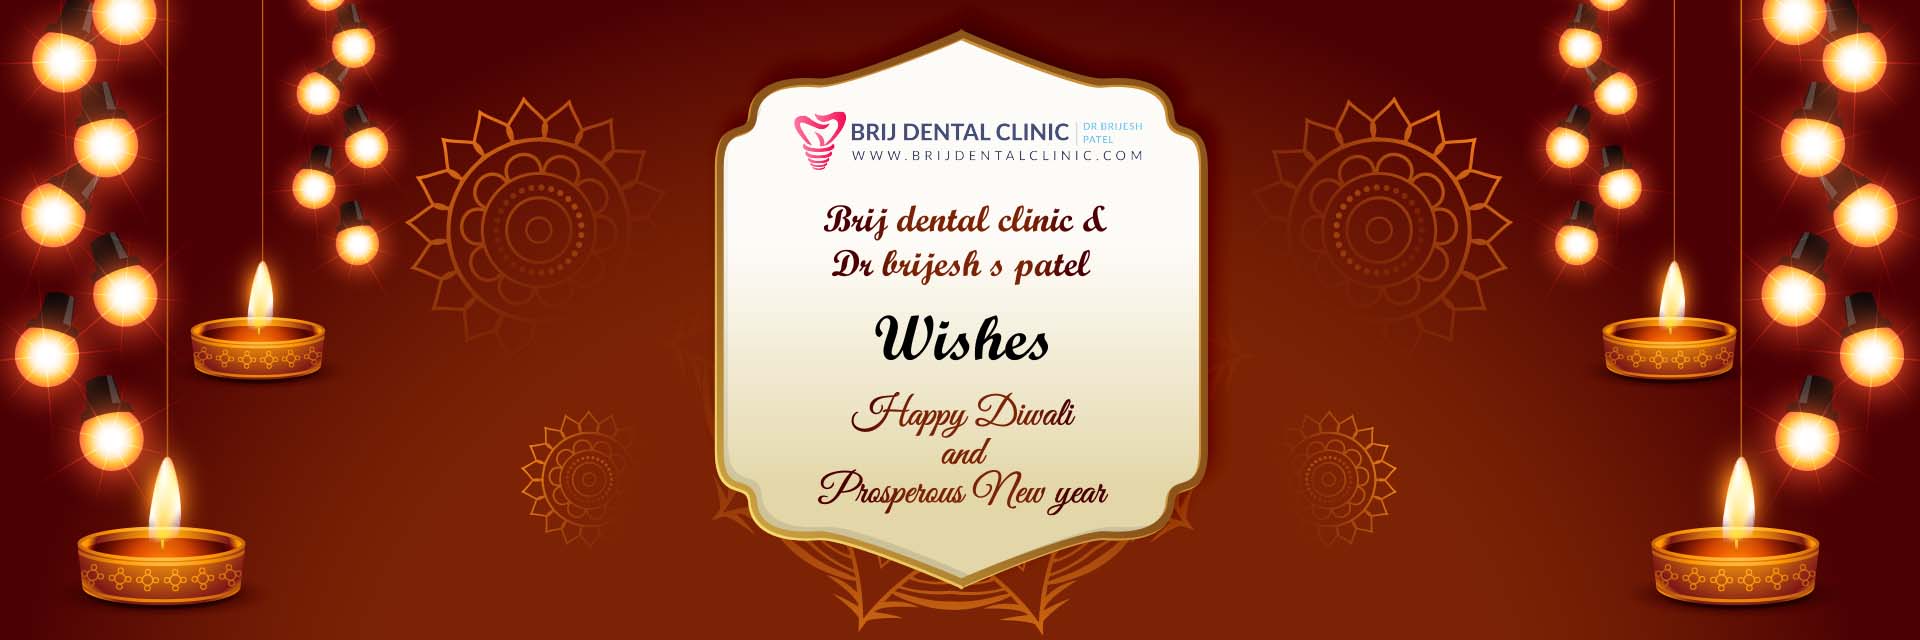 Brij Dental Clinic, wishes Happy Diwali, Clinic Open In Diwali Days